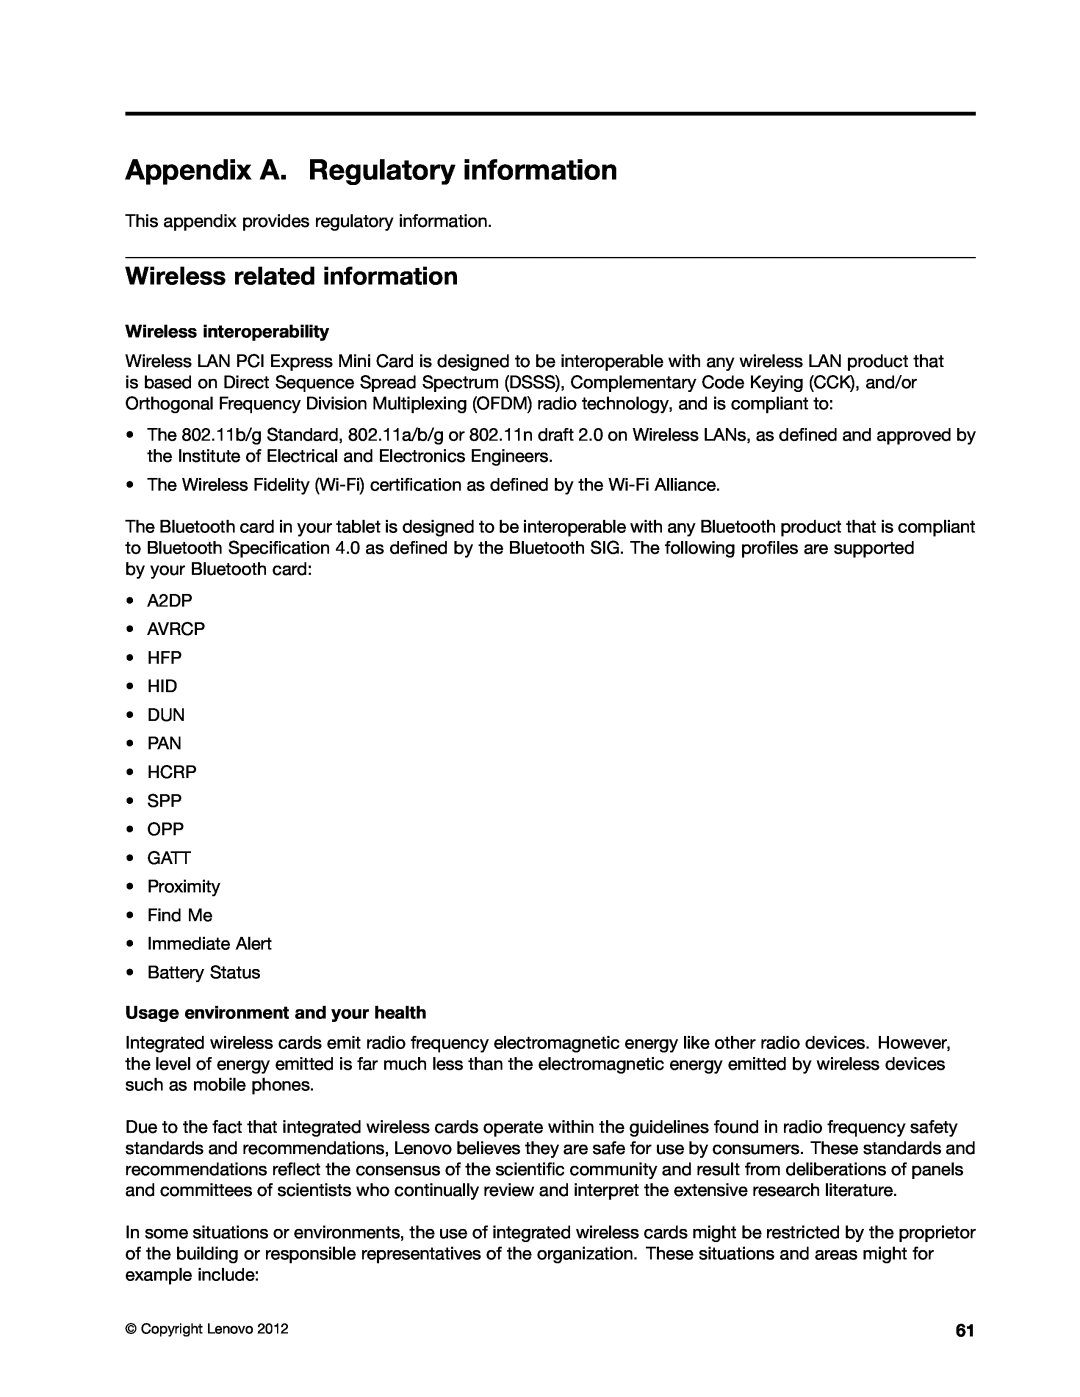 Lenovo 36984MU, 36984UU manual Appendix A. Regulatory information, Wireless related information, Wireless interoperability 